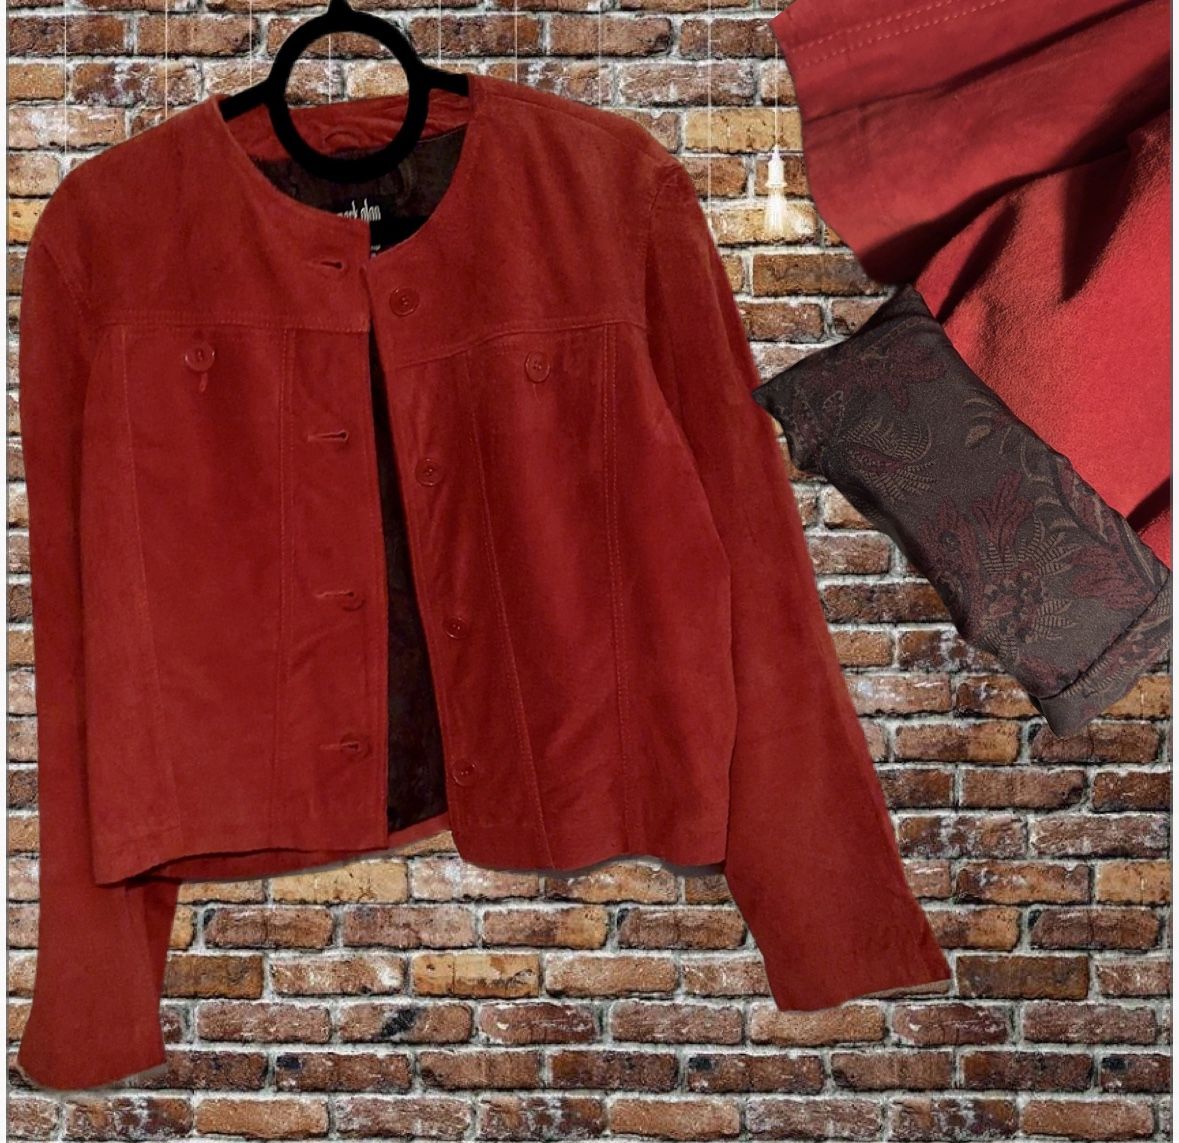 Mark Alan Leather Jacket Genuine Leather Size Med Women’s Burnt Red